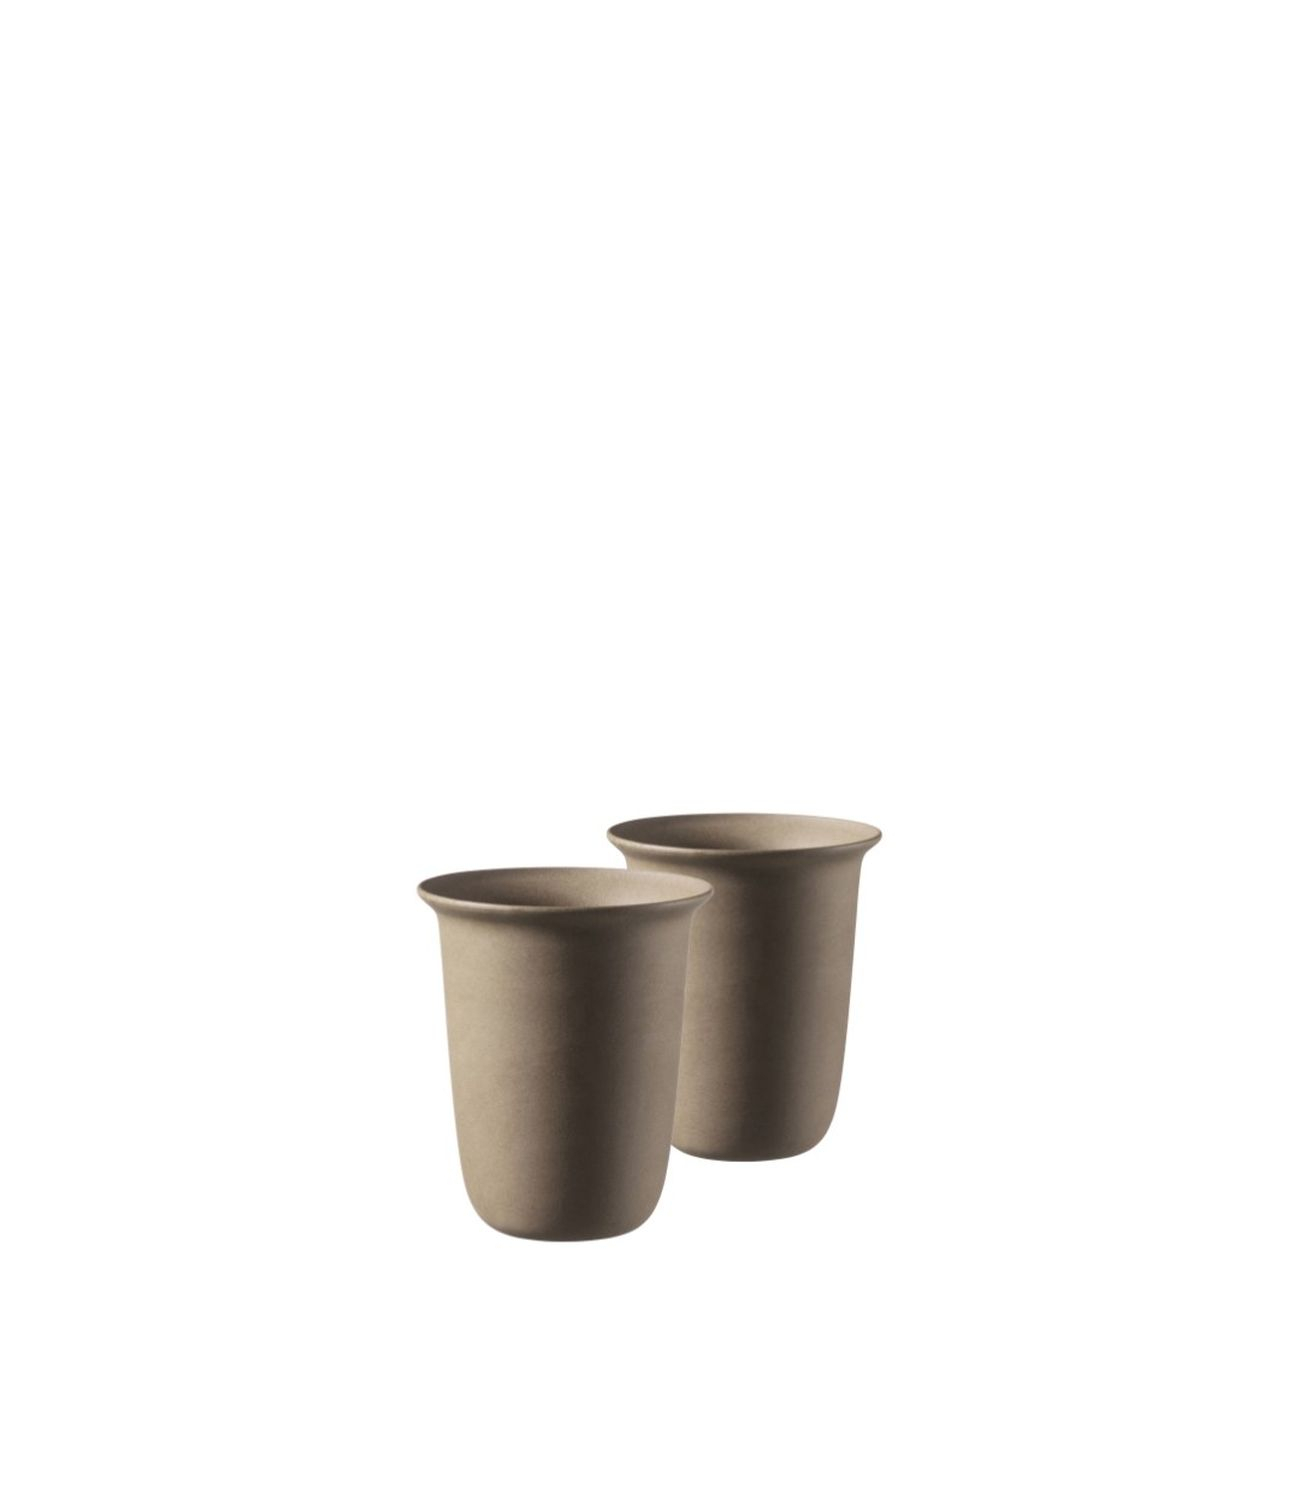 2x Ildpot Kaffeetasse Keramik Braun